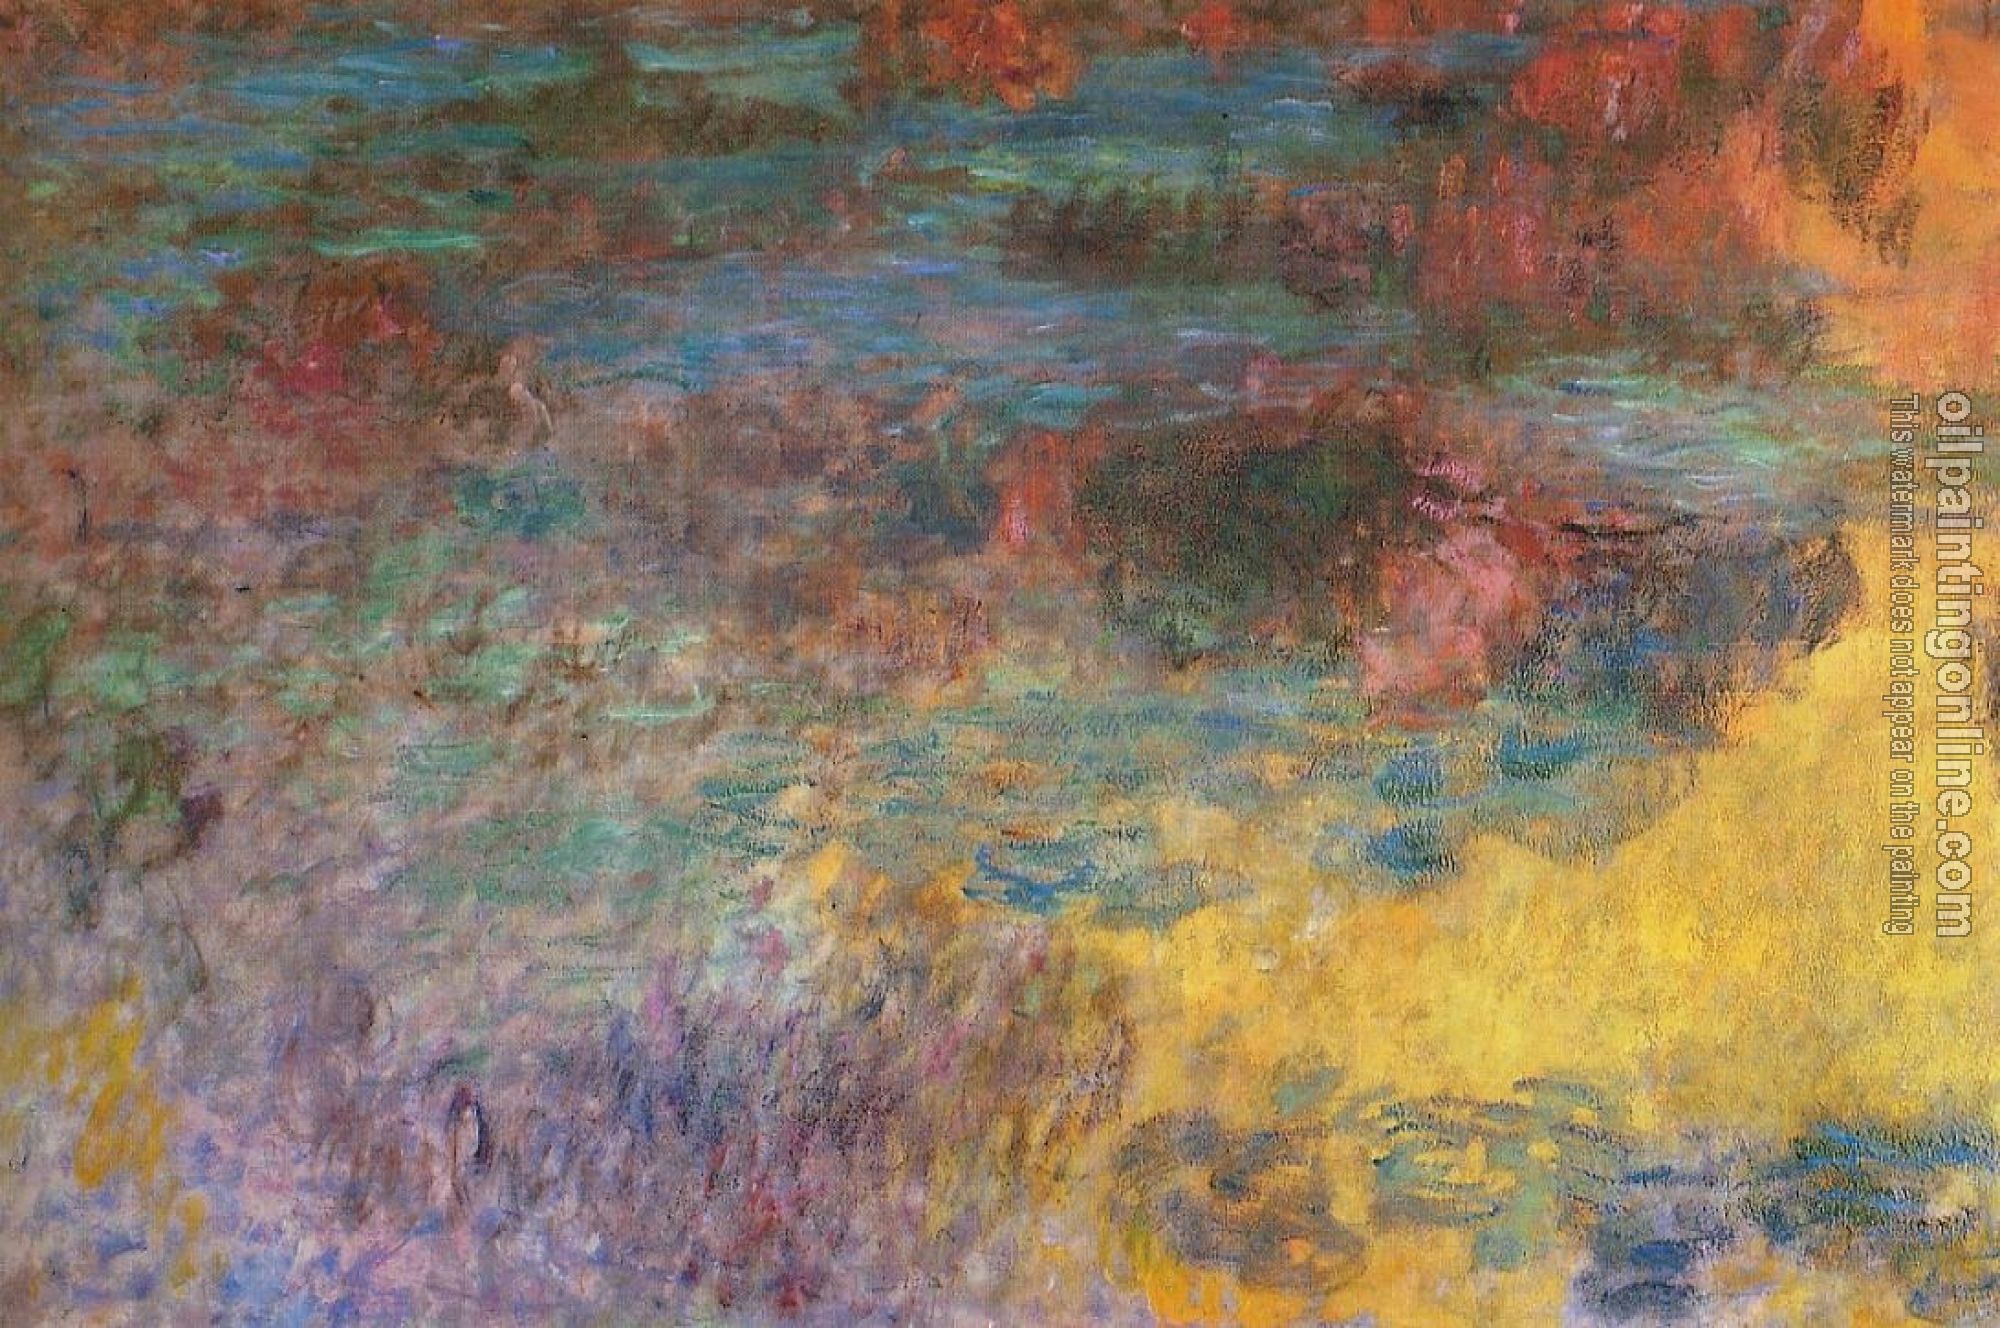 Monet, Claude Oscar - Water-Lily Pond, Evening, left panel